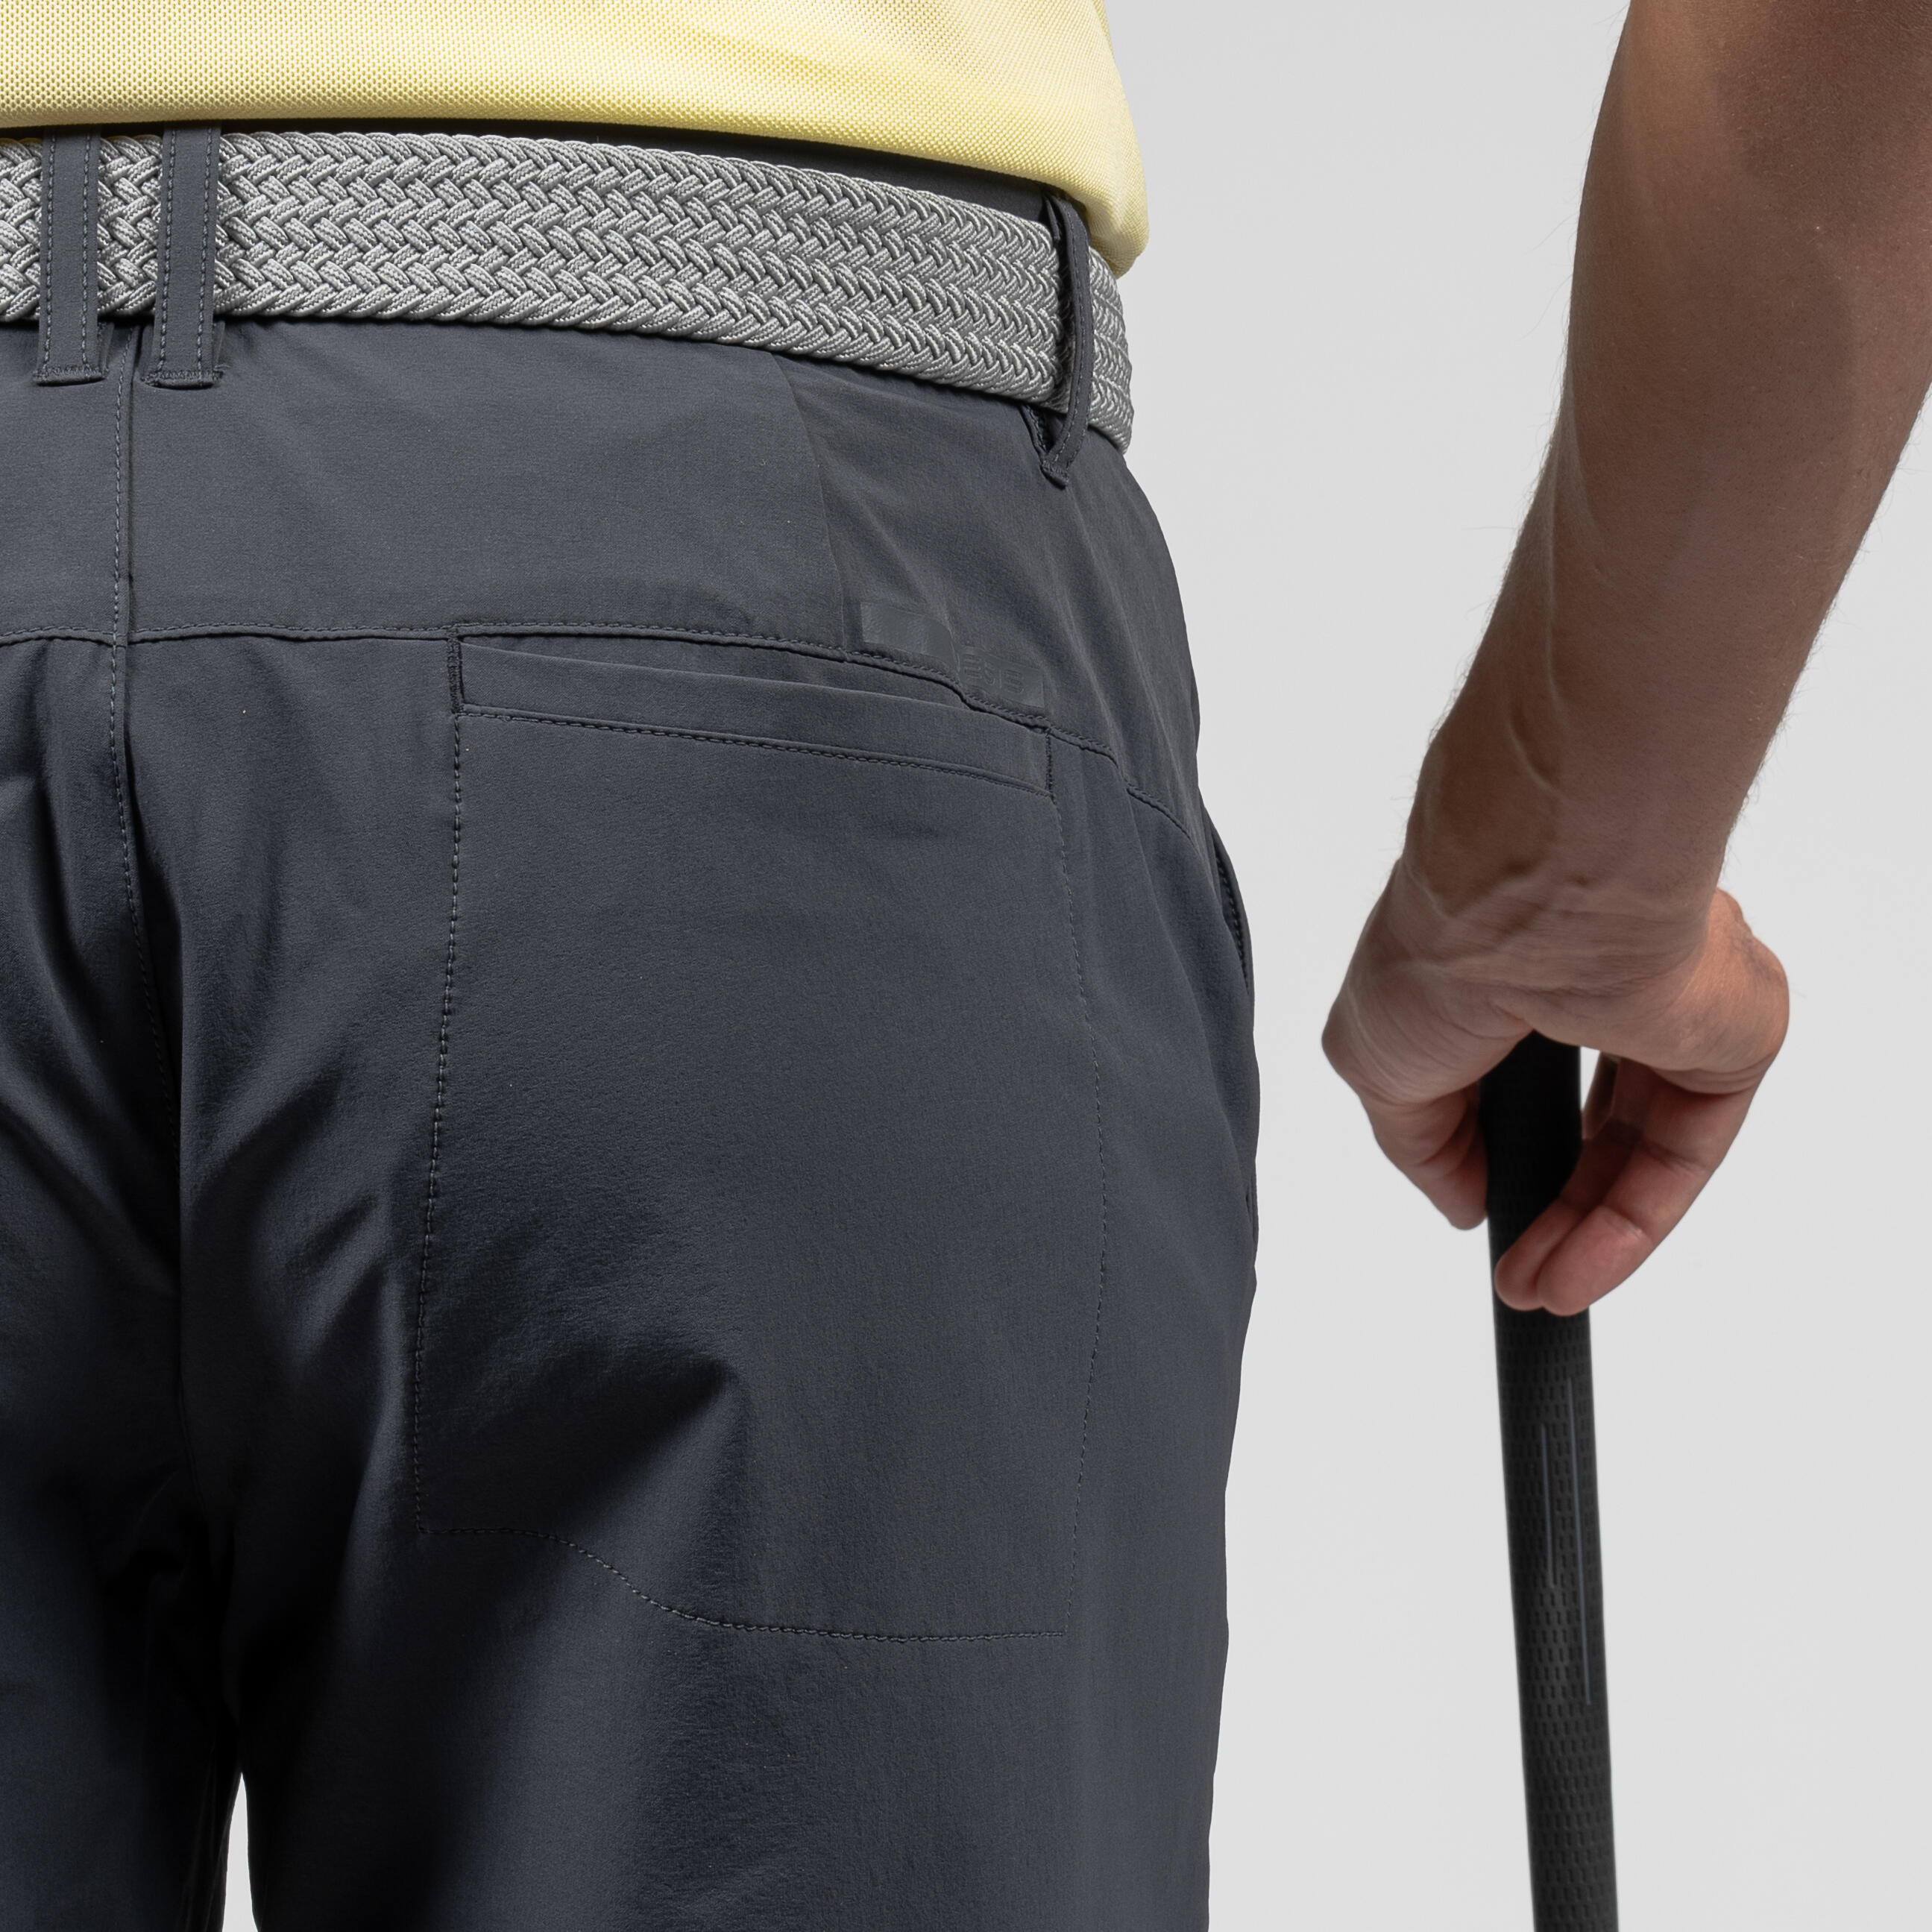 Men's golf shorts WW500 grey